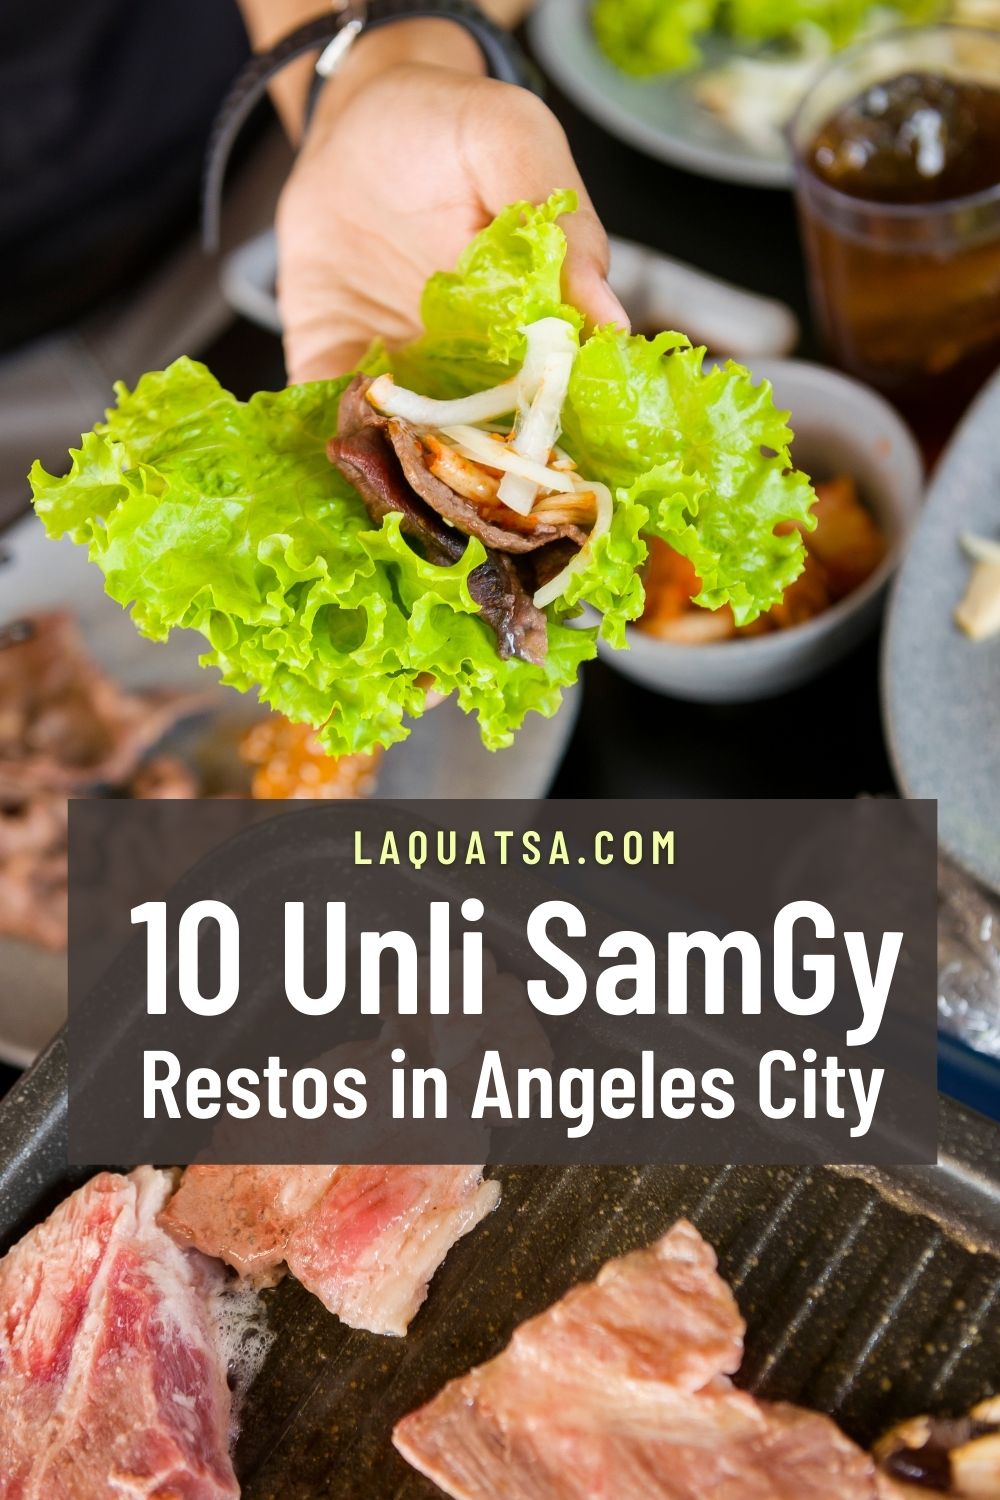 10 Unli Samgy Restaurants in Angeles City